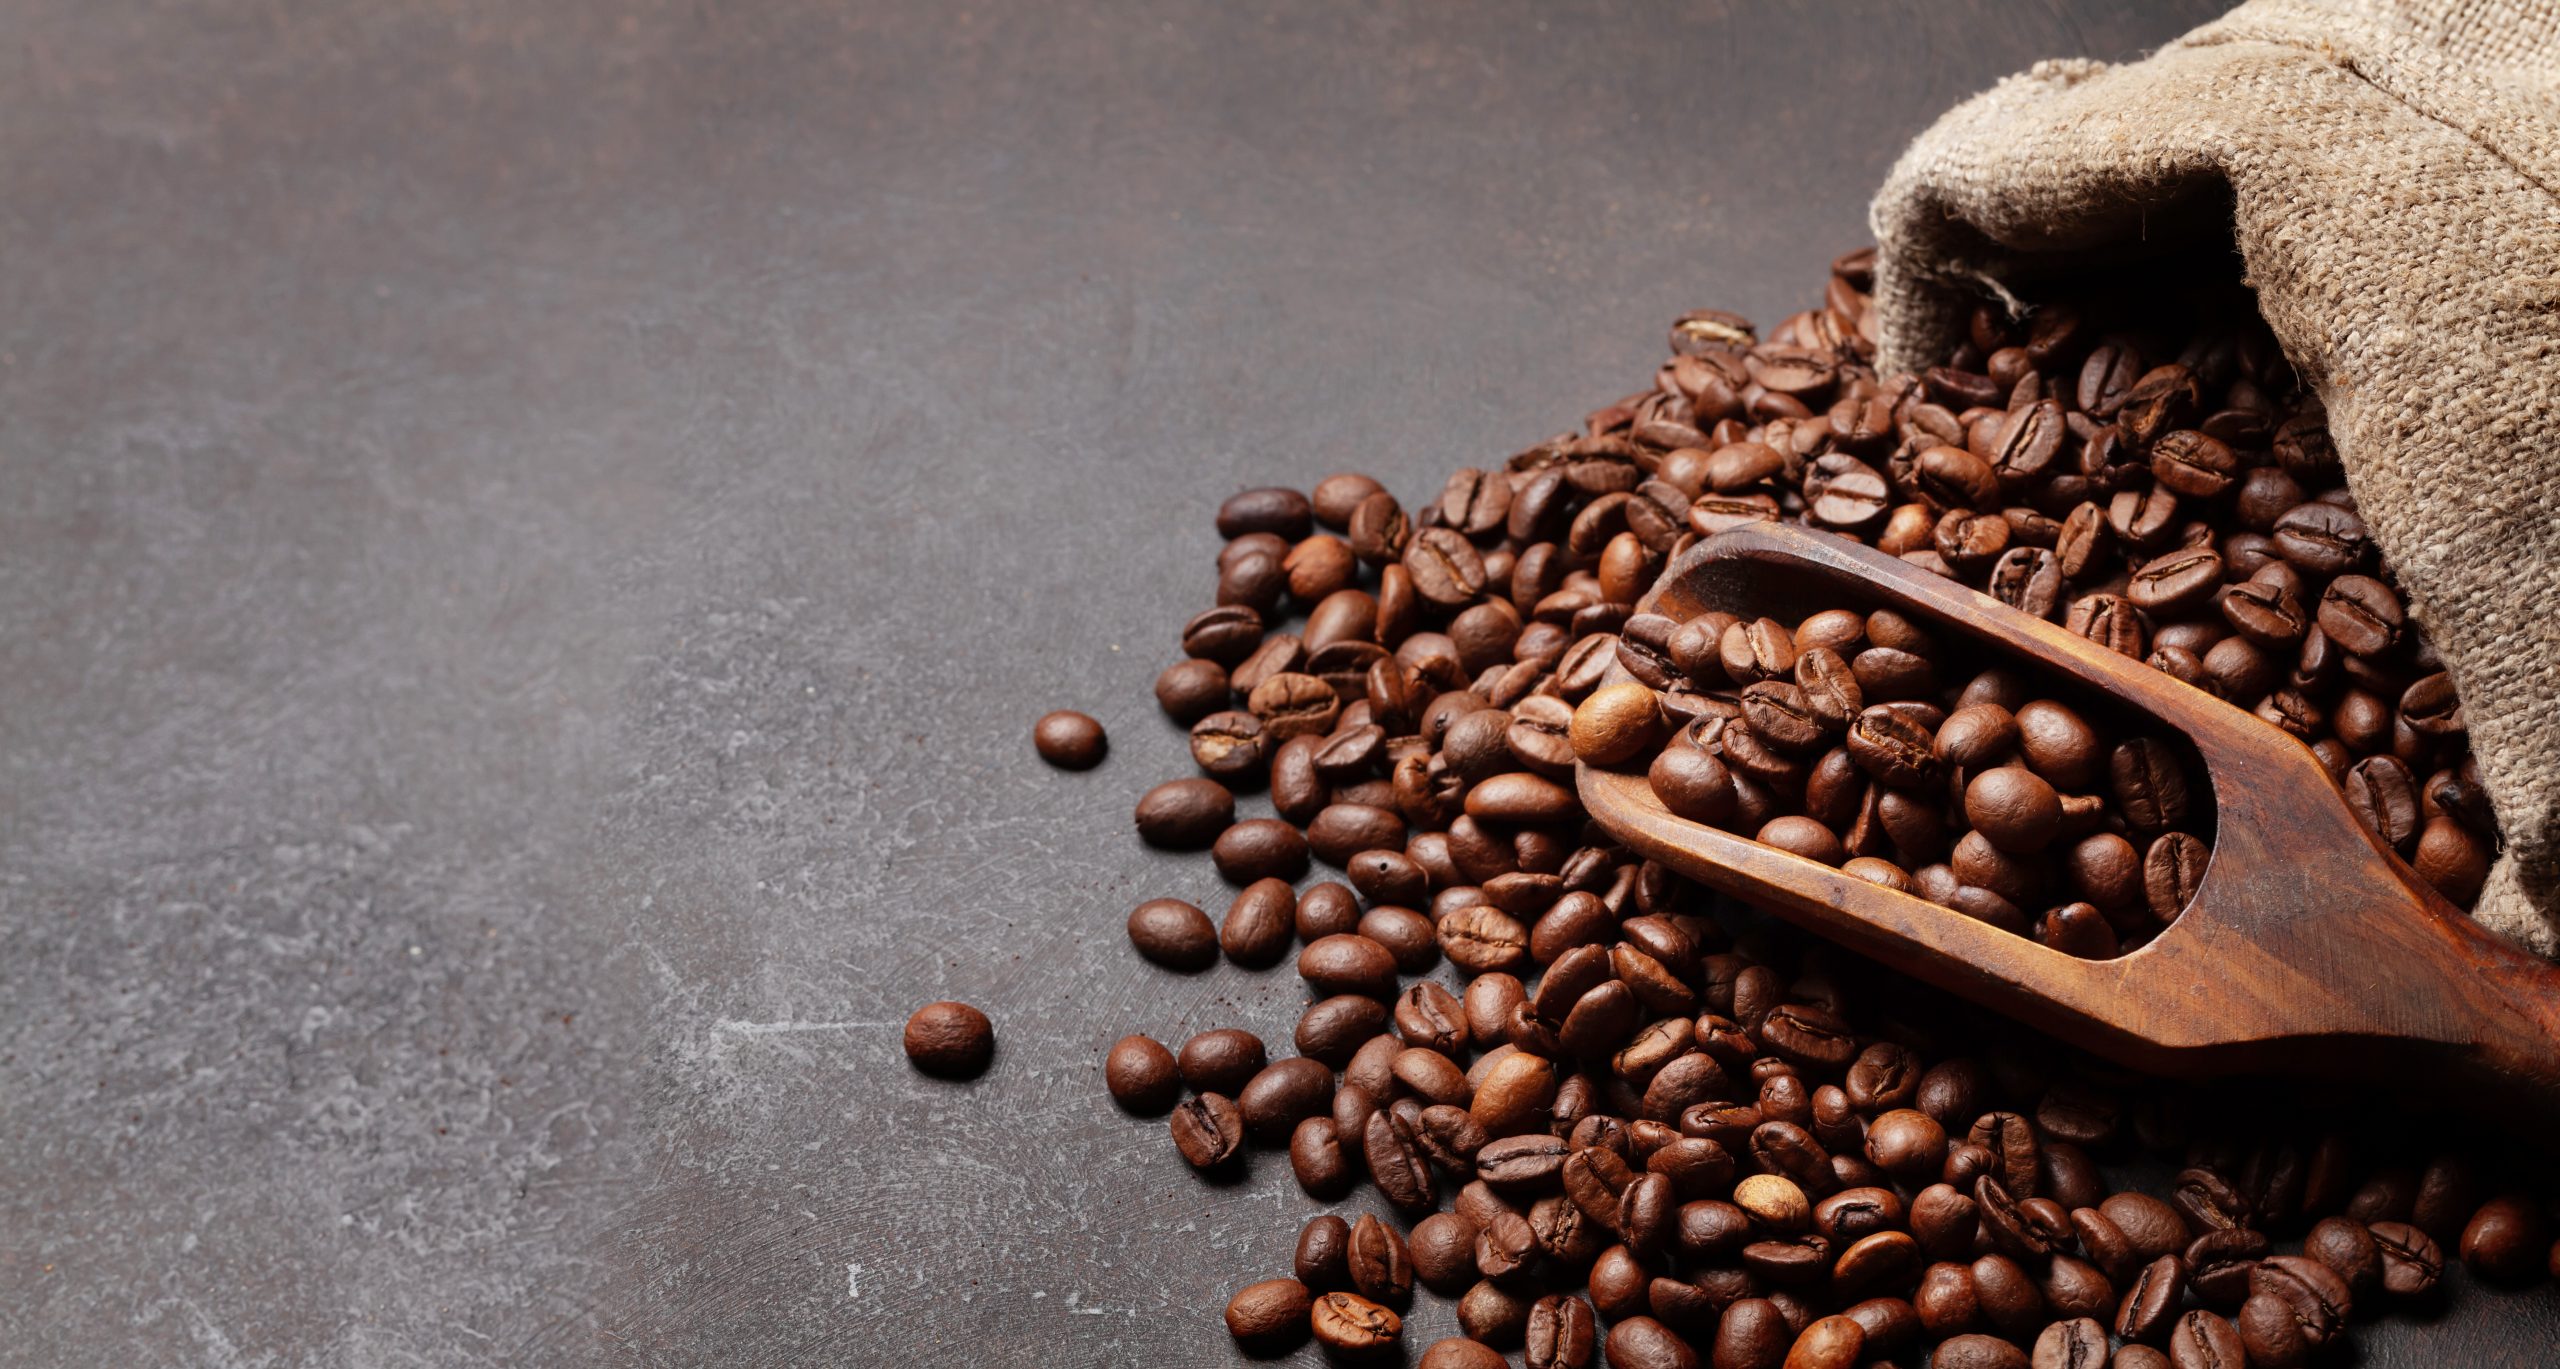 roasted coffee beans in bag 2023 11 27 05 34 16 utc scaled